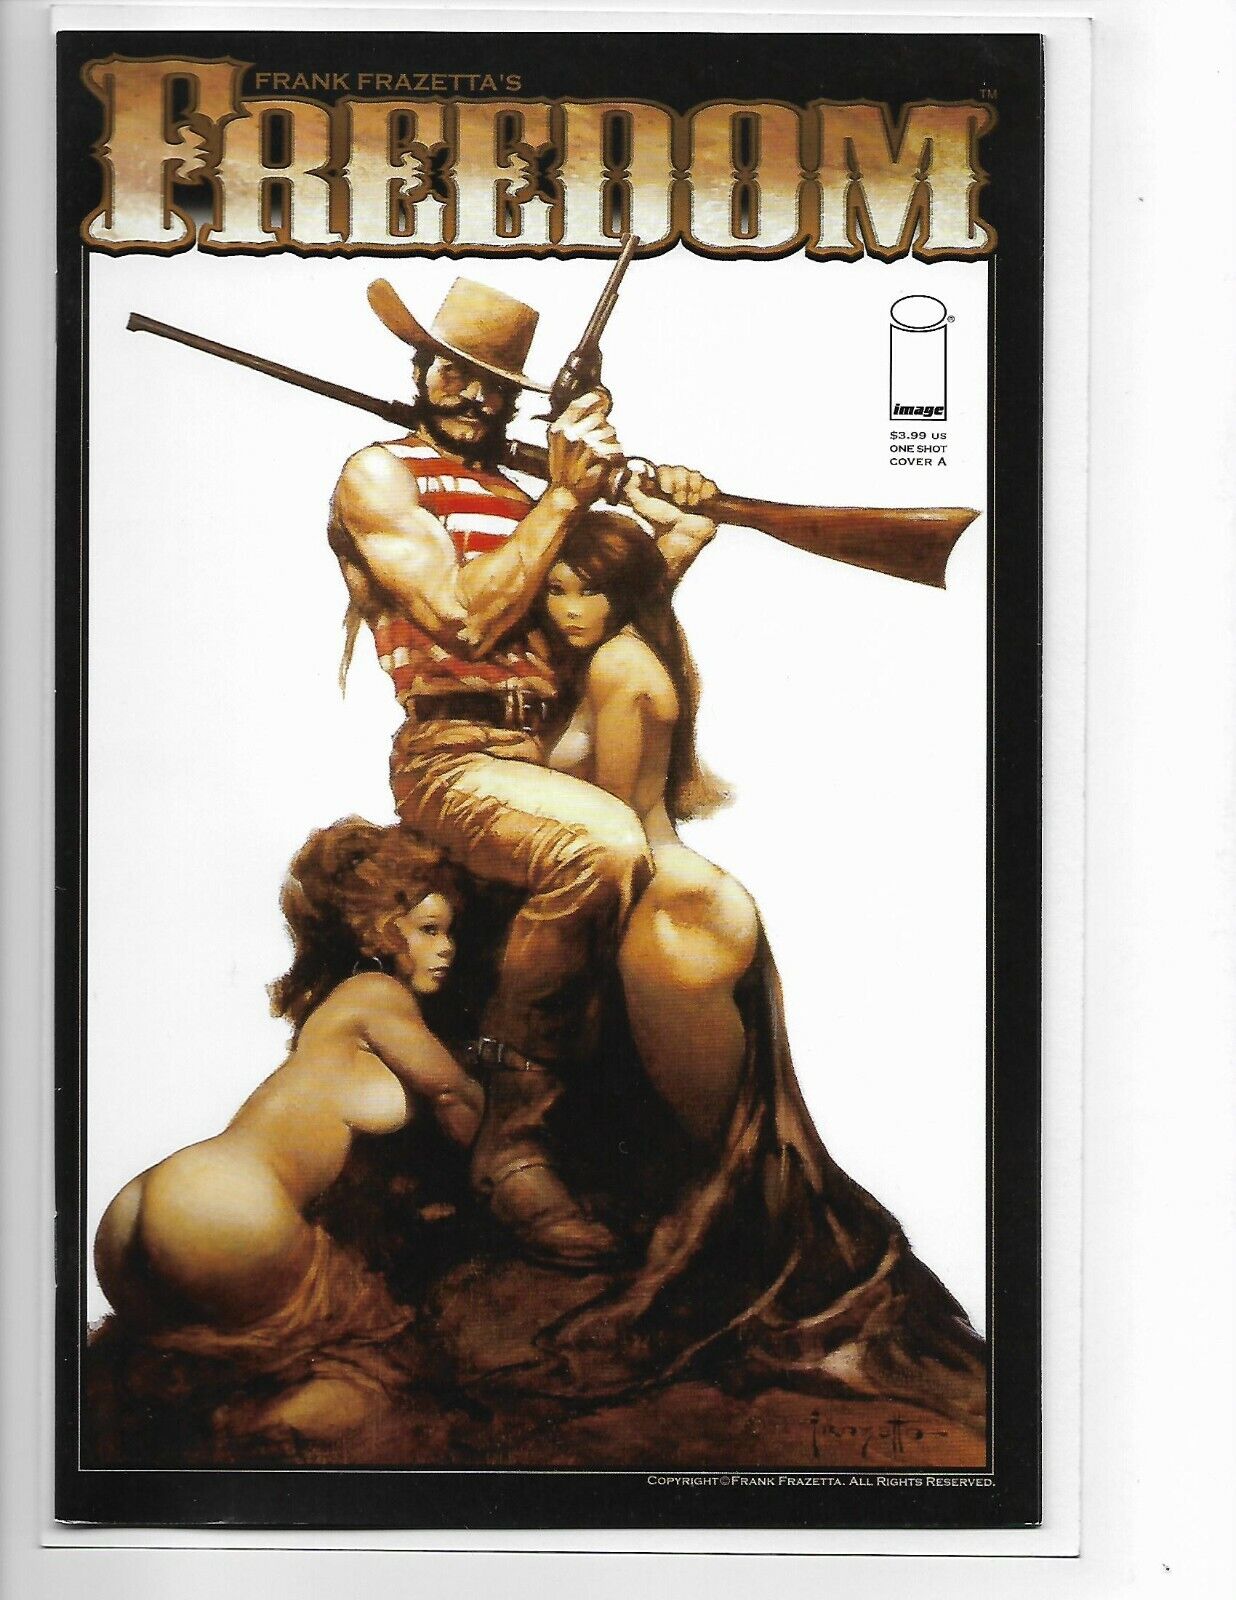 Frank Frazetta's Freedom #1 cover a one-shot / Image comics